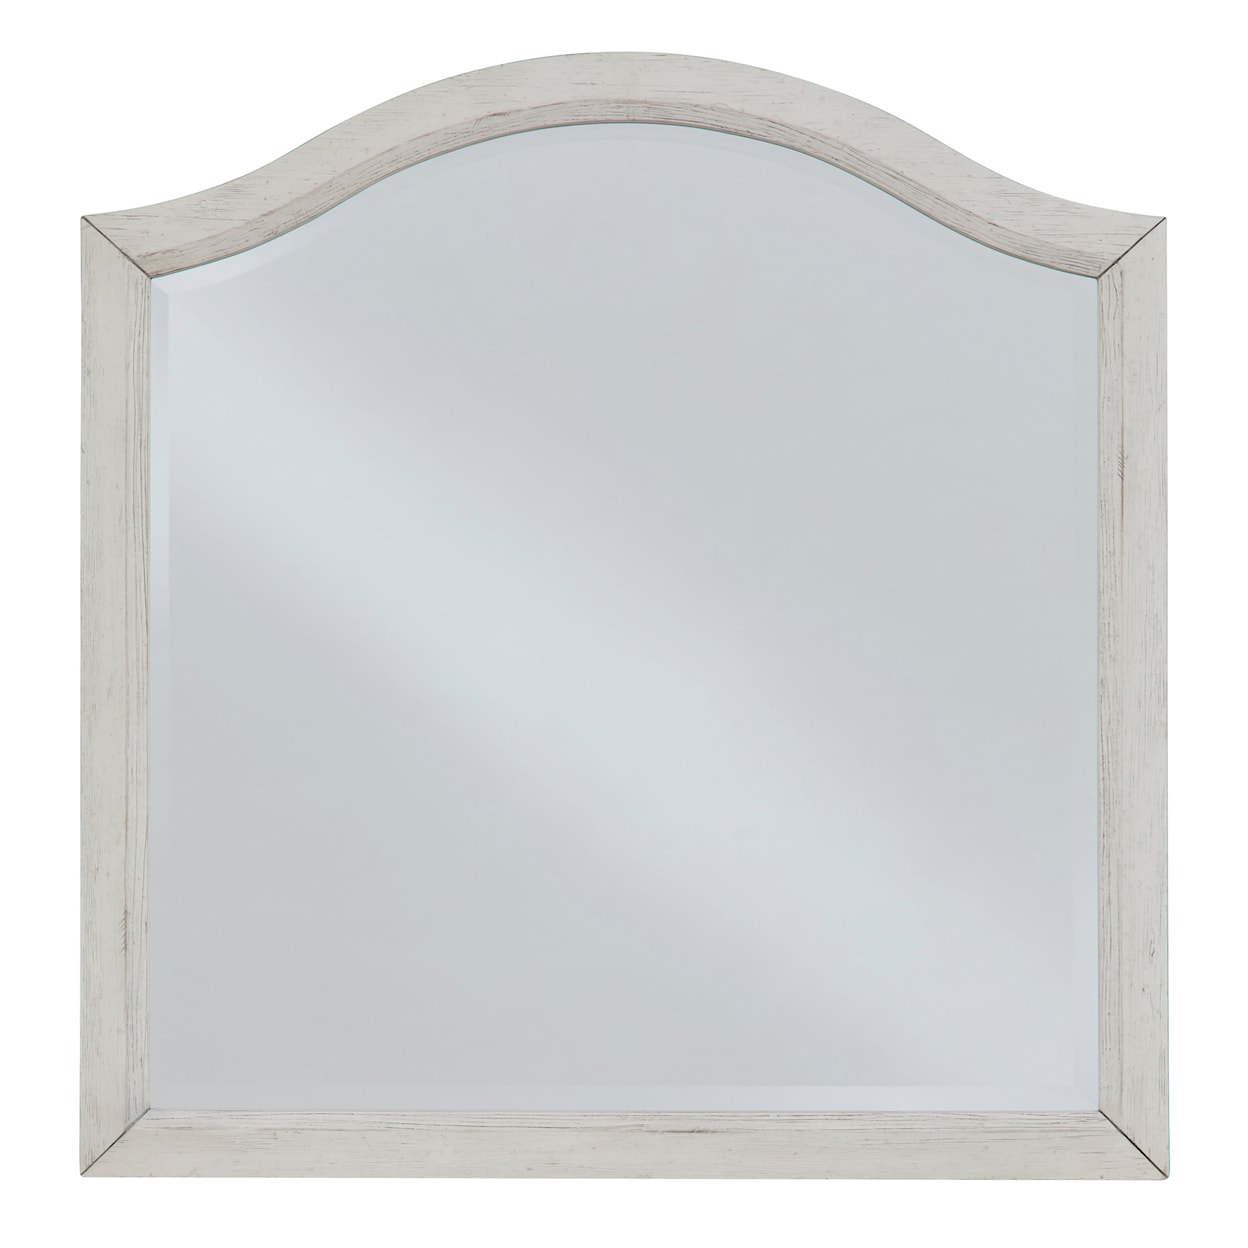 Benchcraft Robbinsdale Vanity Mirror